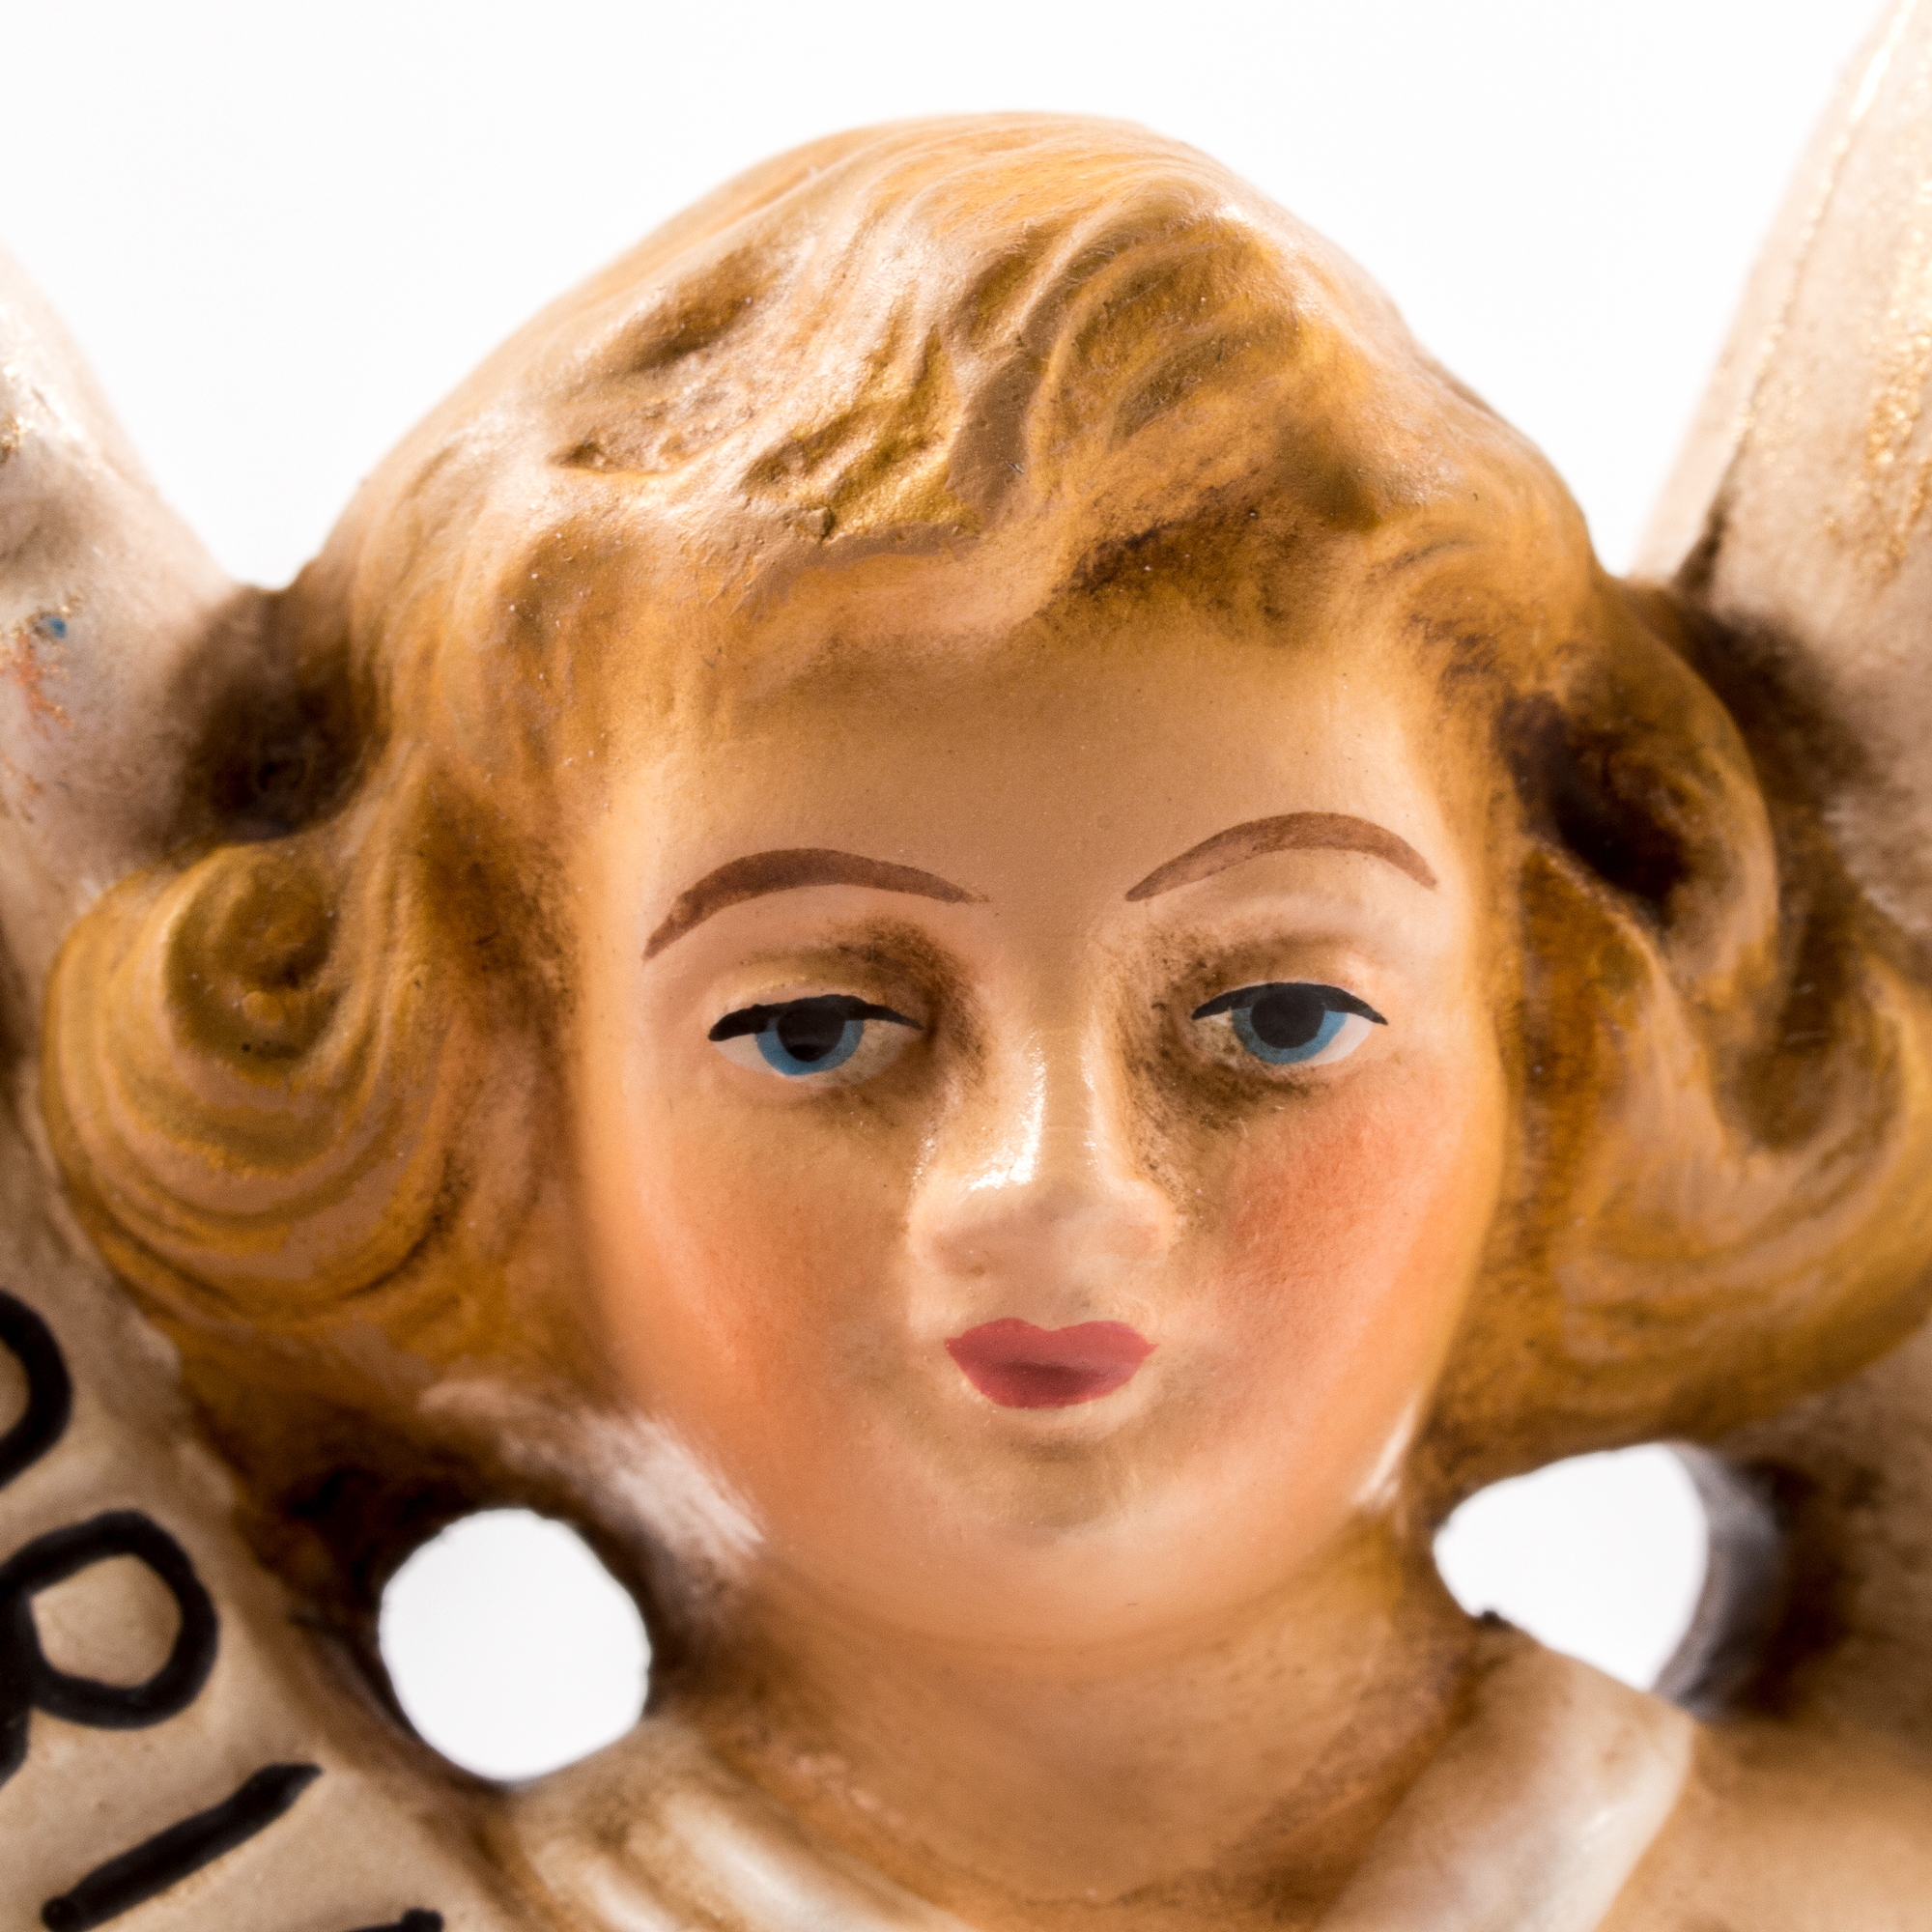 Gloria angel - Marolin Nativity figure - made in Germany